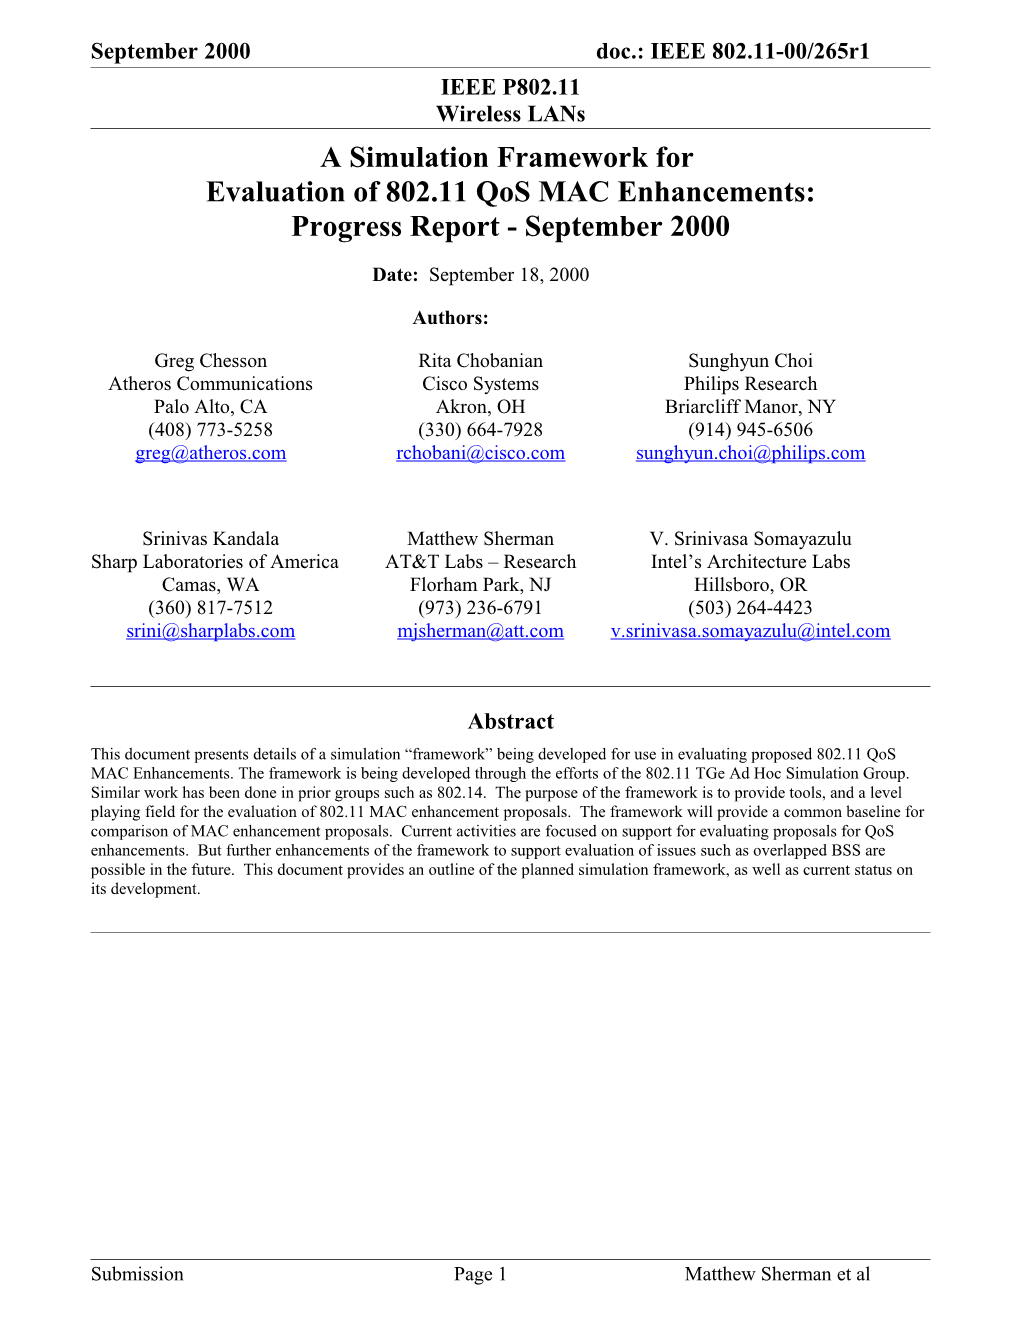 Evaluation of 802.11 Qos MAC Enhancements